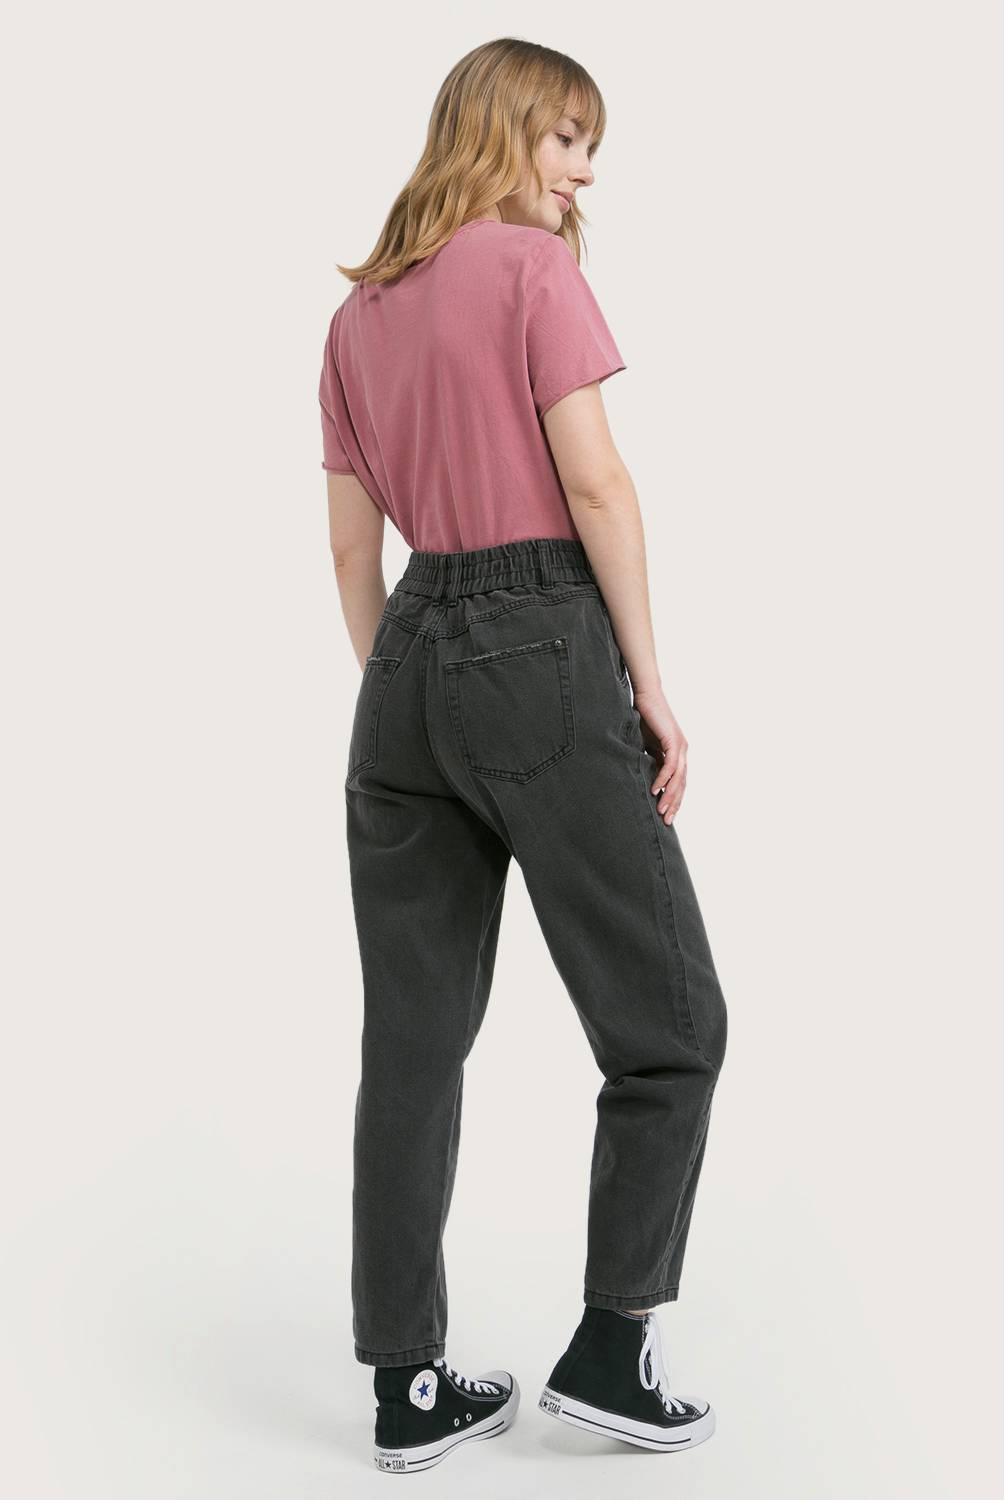 AMERICANINO - Jeans de Algodón Mujer